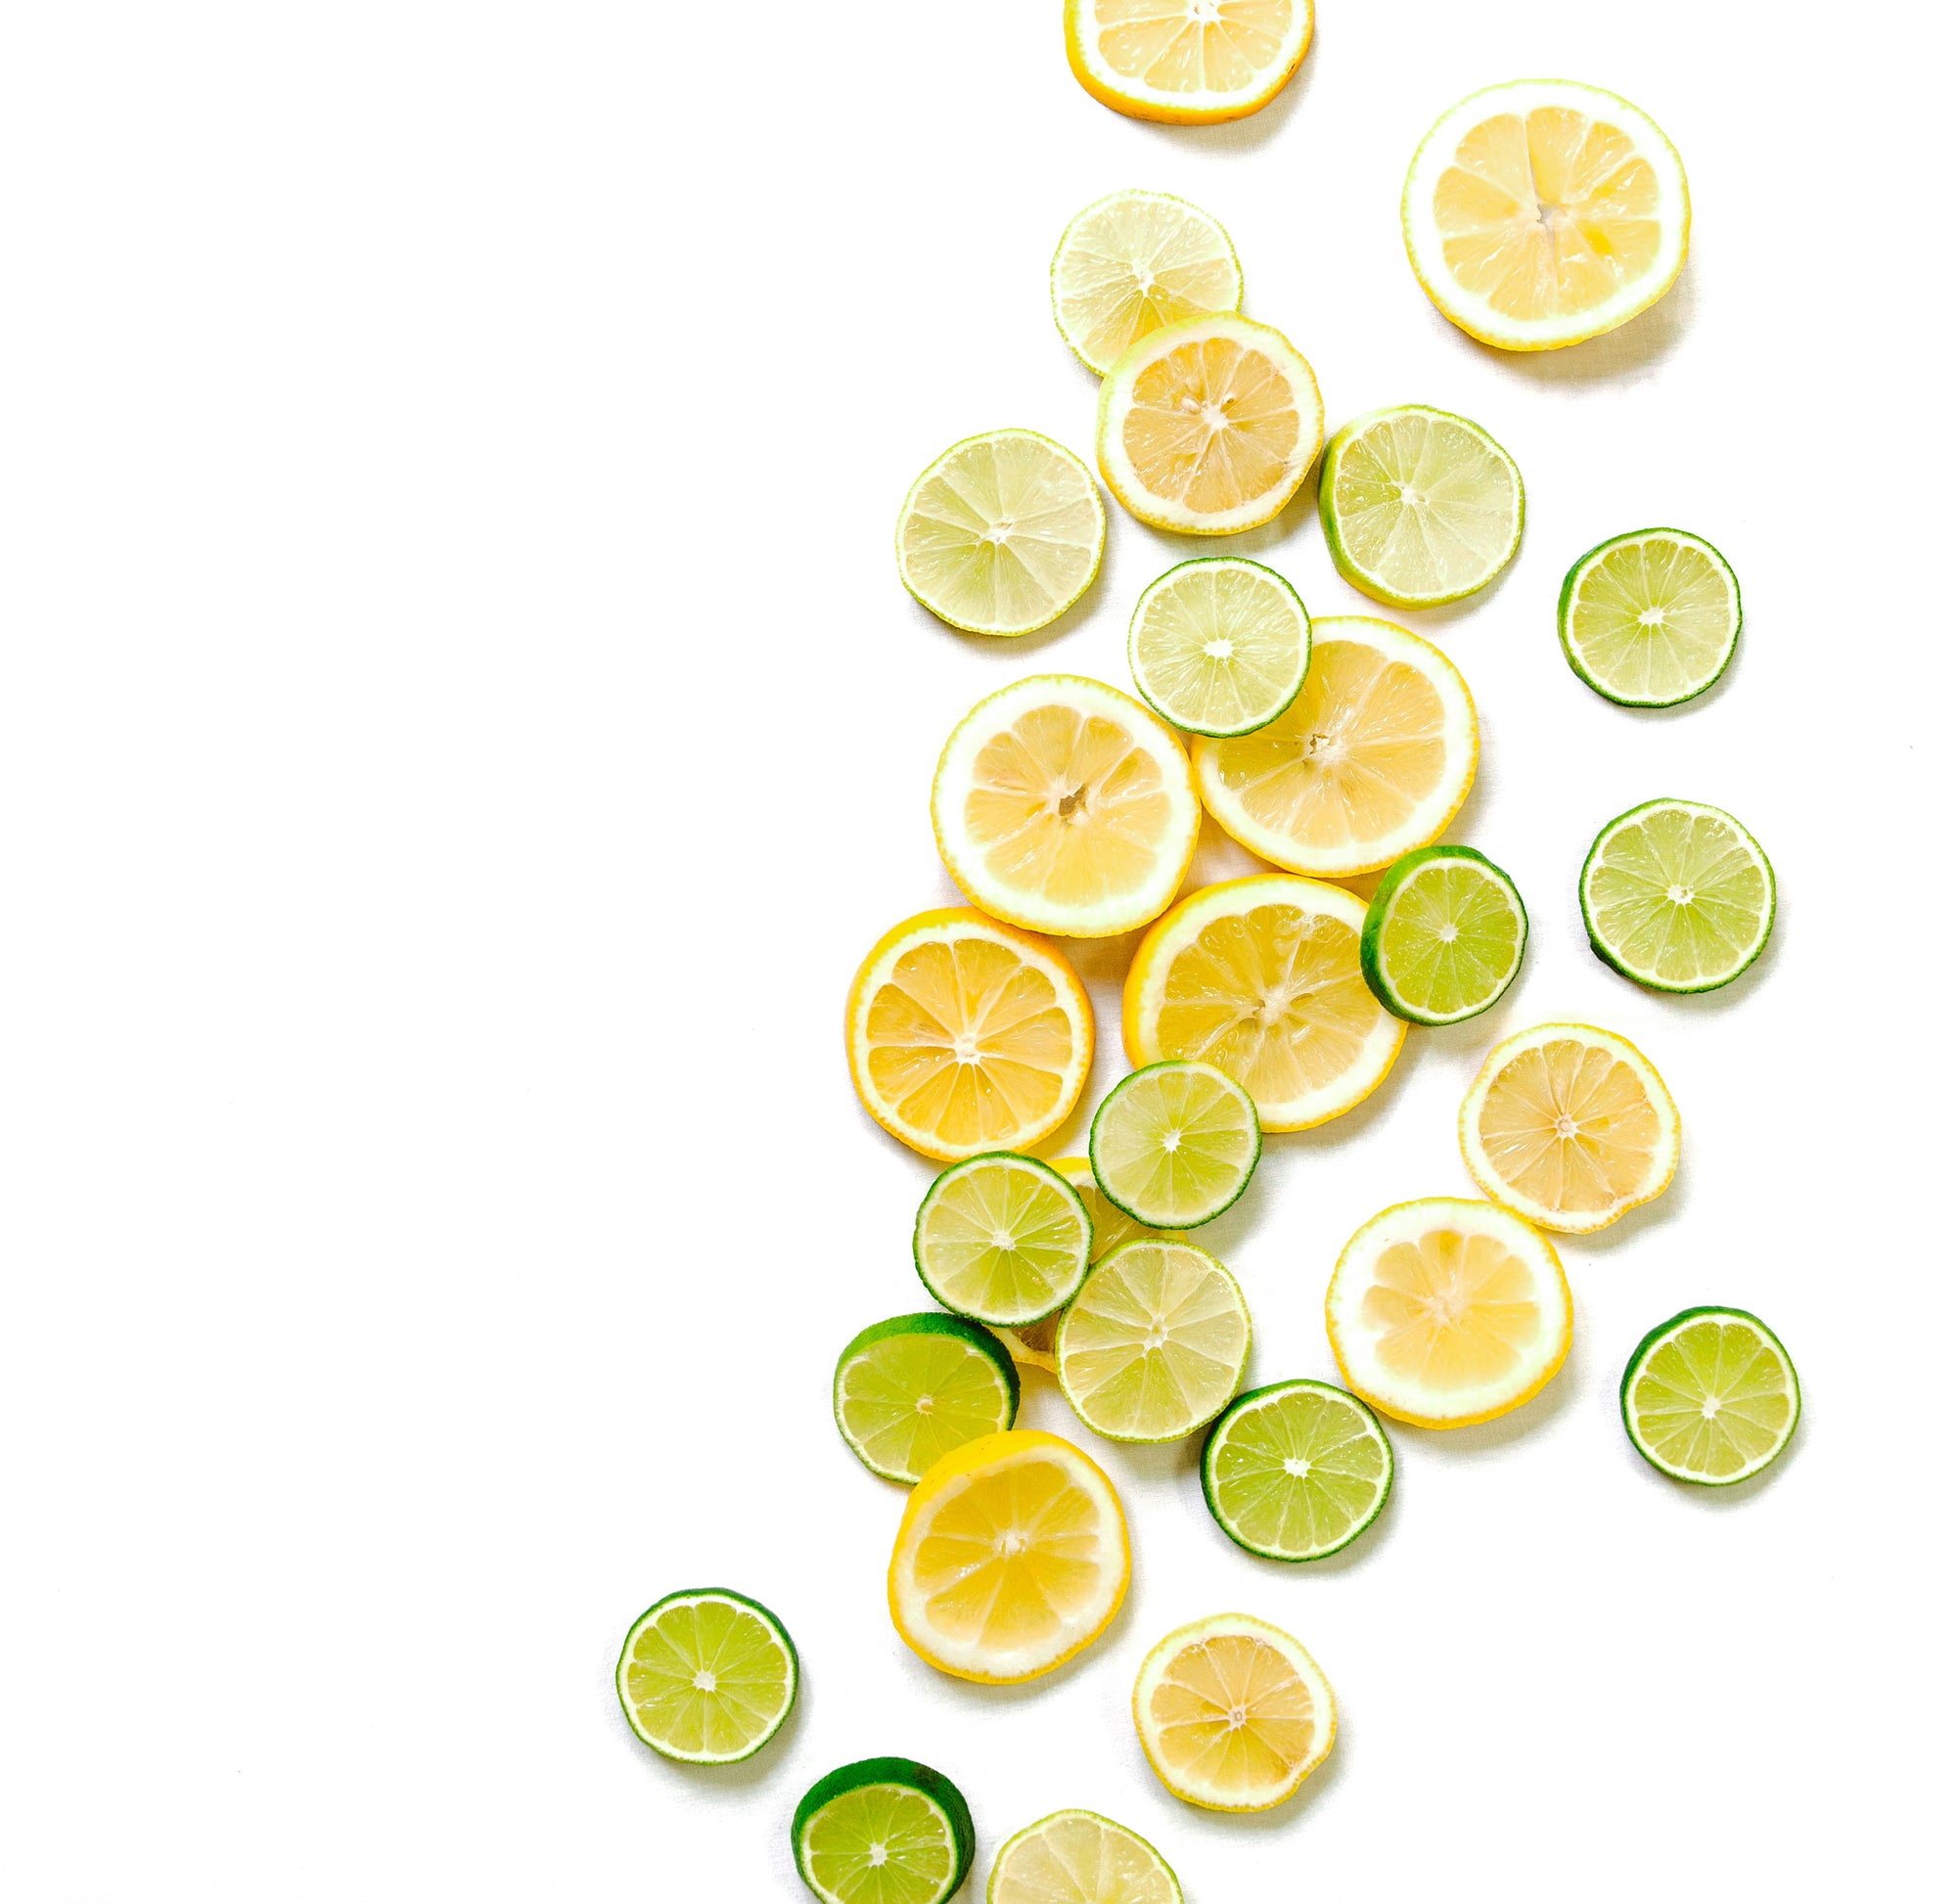 If life gives you lemons, you can make lemonade… or you can make superfood smoothies!